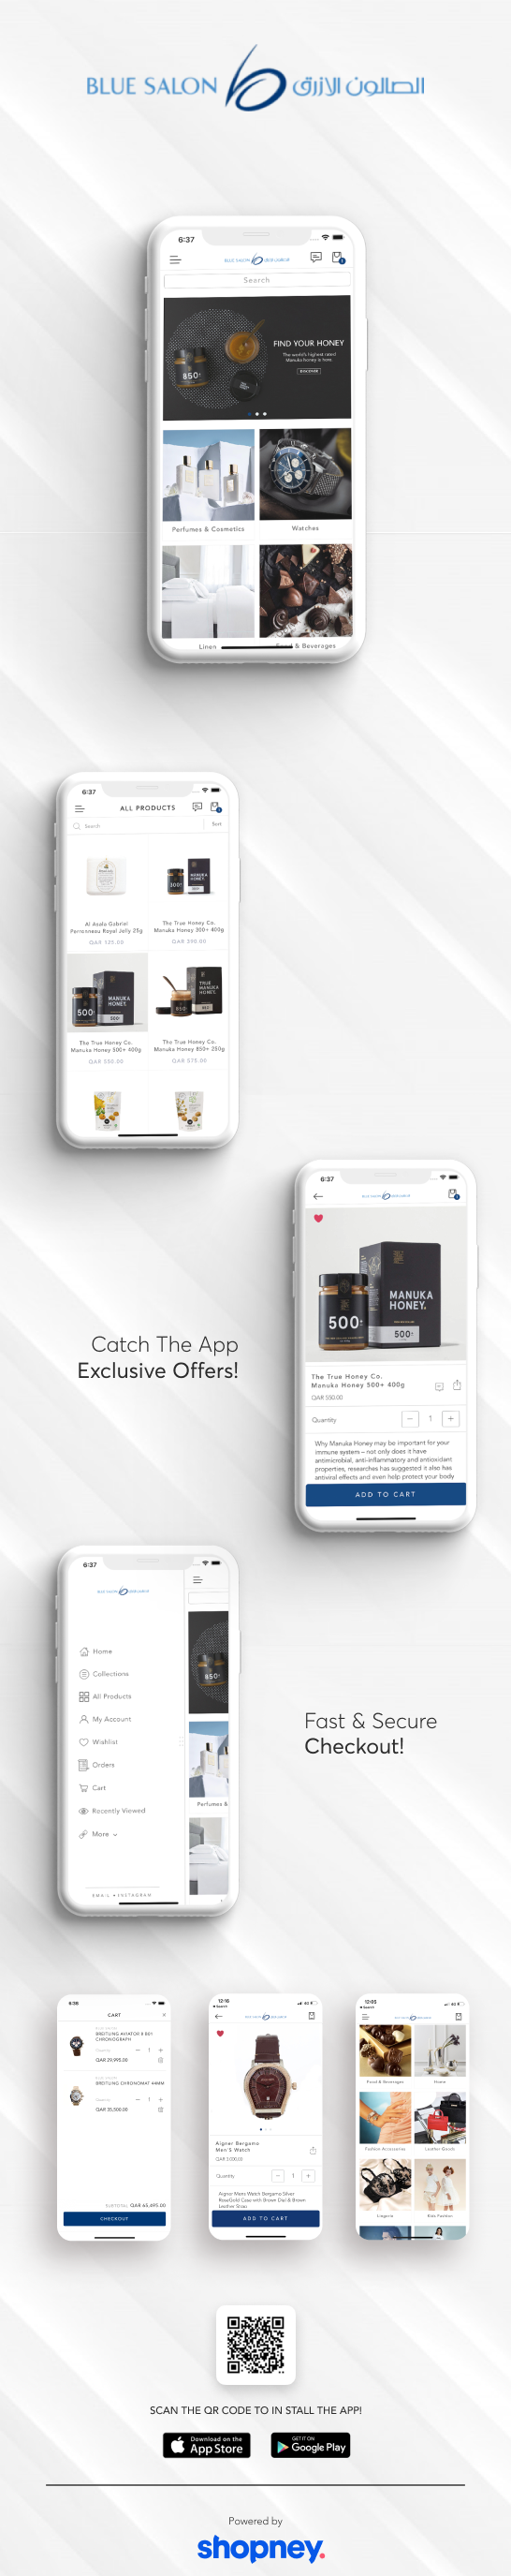 the mobile app design of Blue Salon app